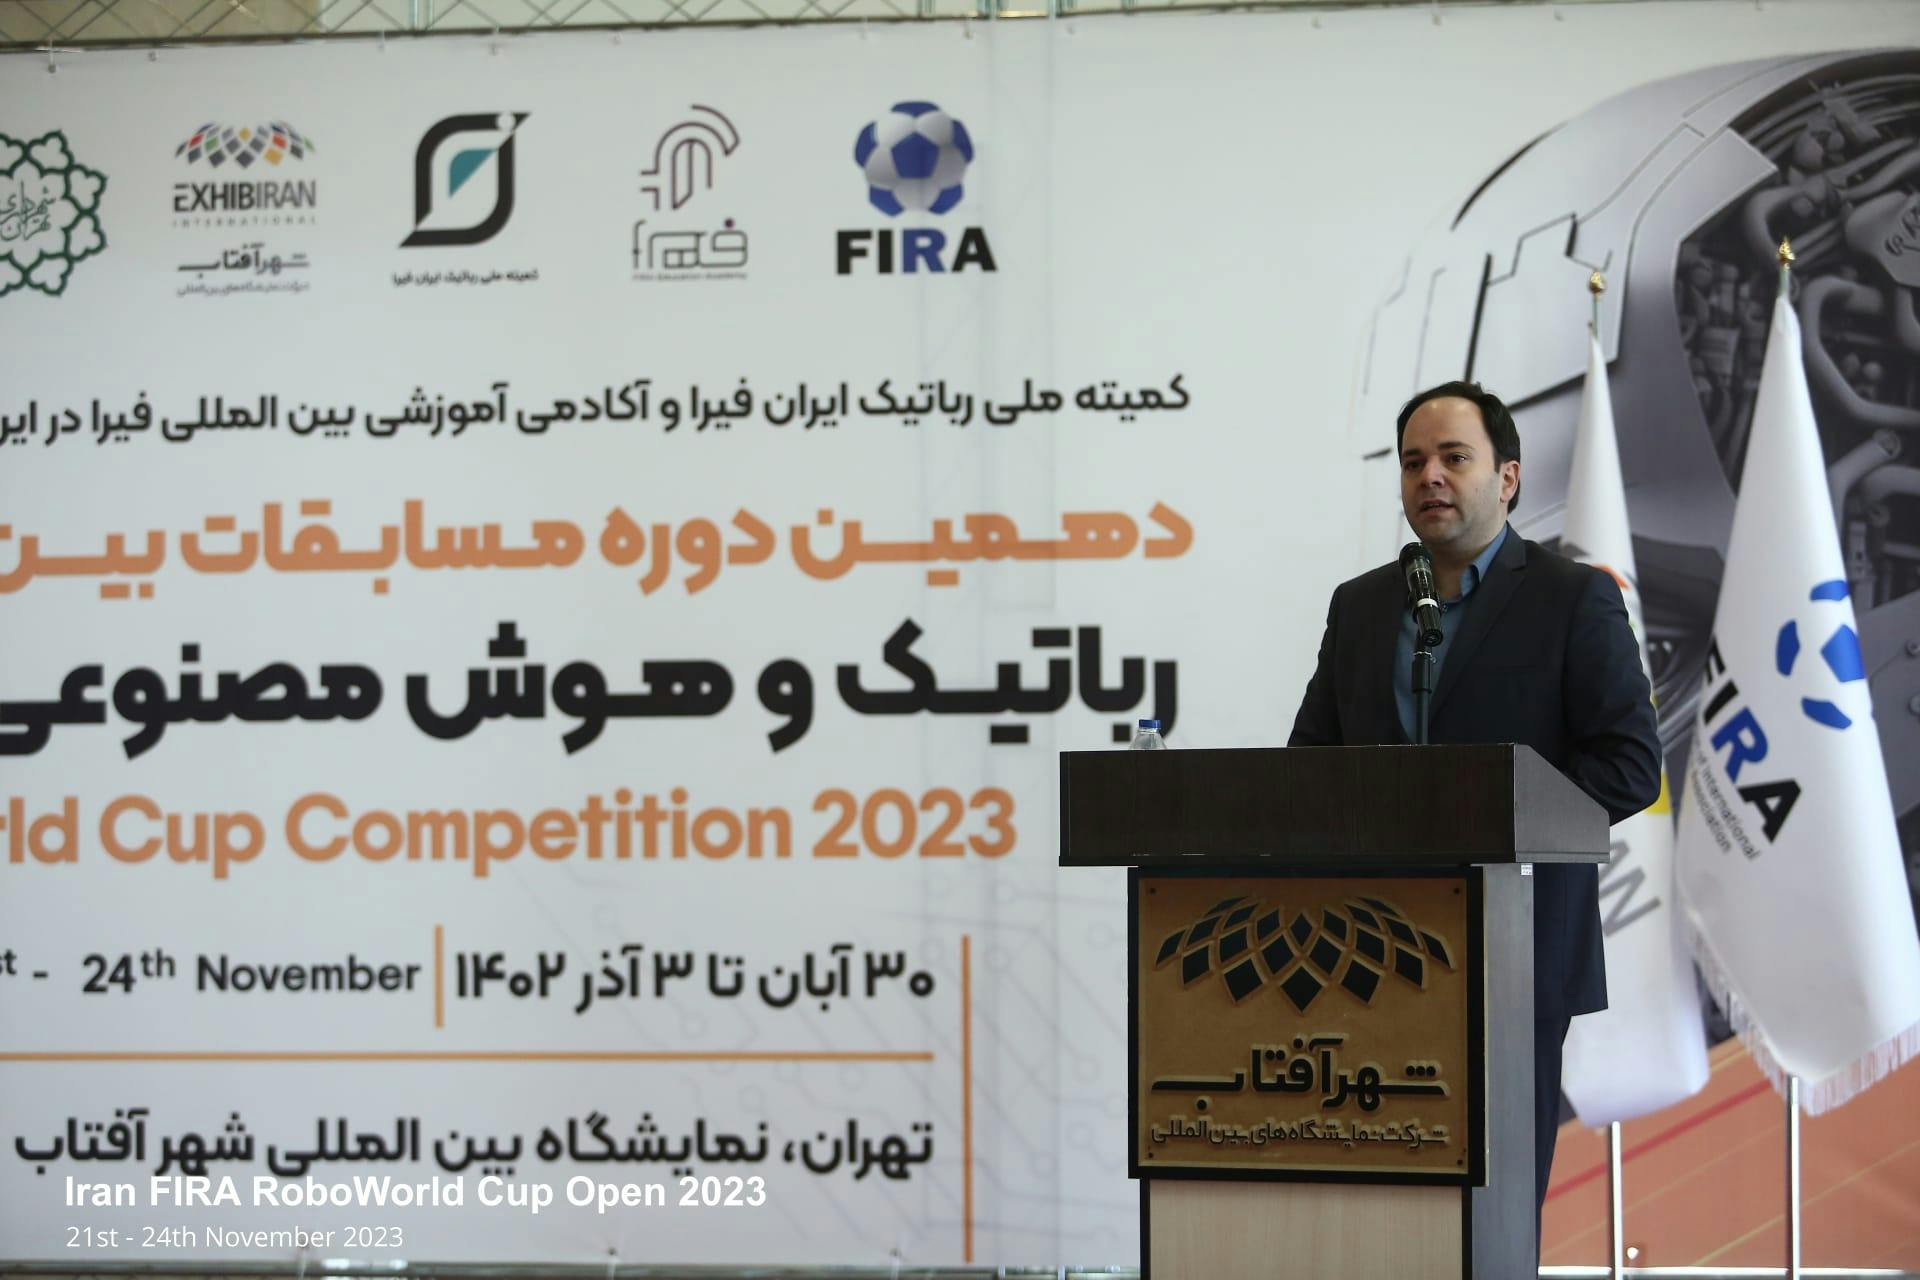 Iran FIRA 2023 Image Gallery